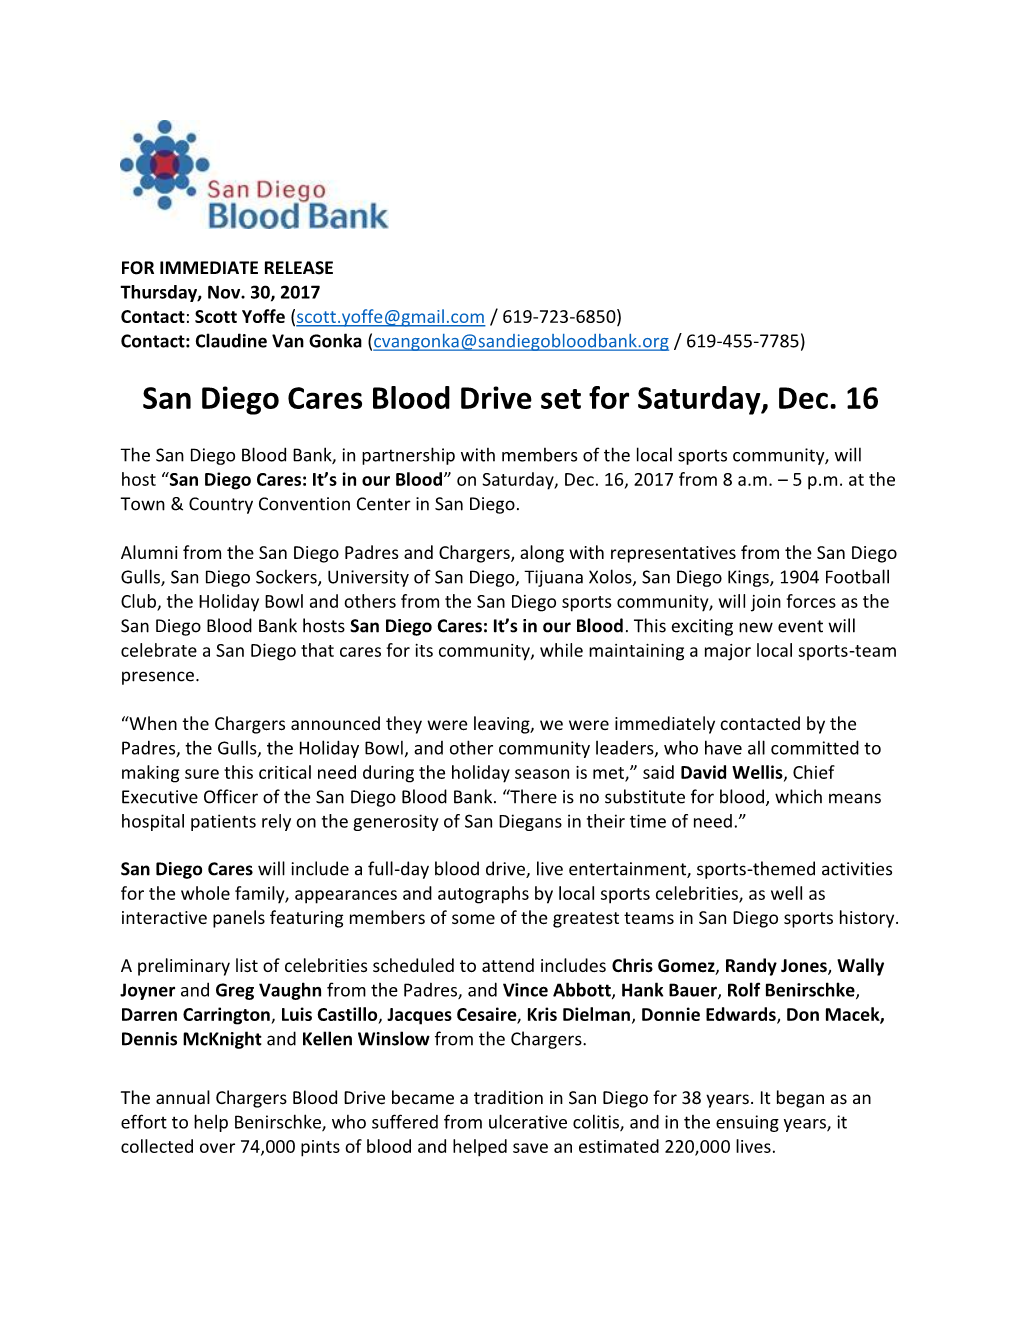 San Diego Cares Blood Drive Set for Saturday, Dec. 16